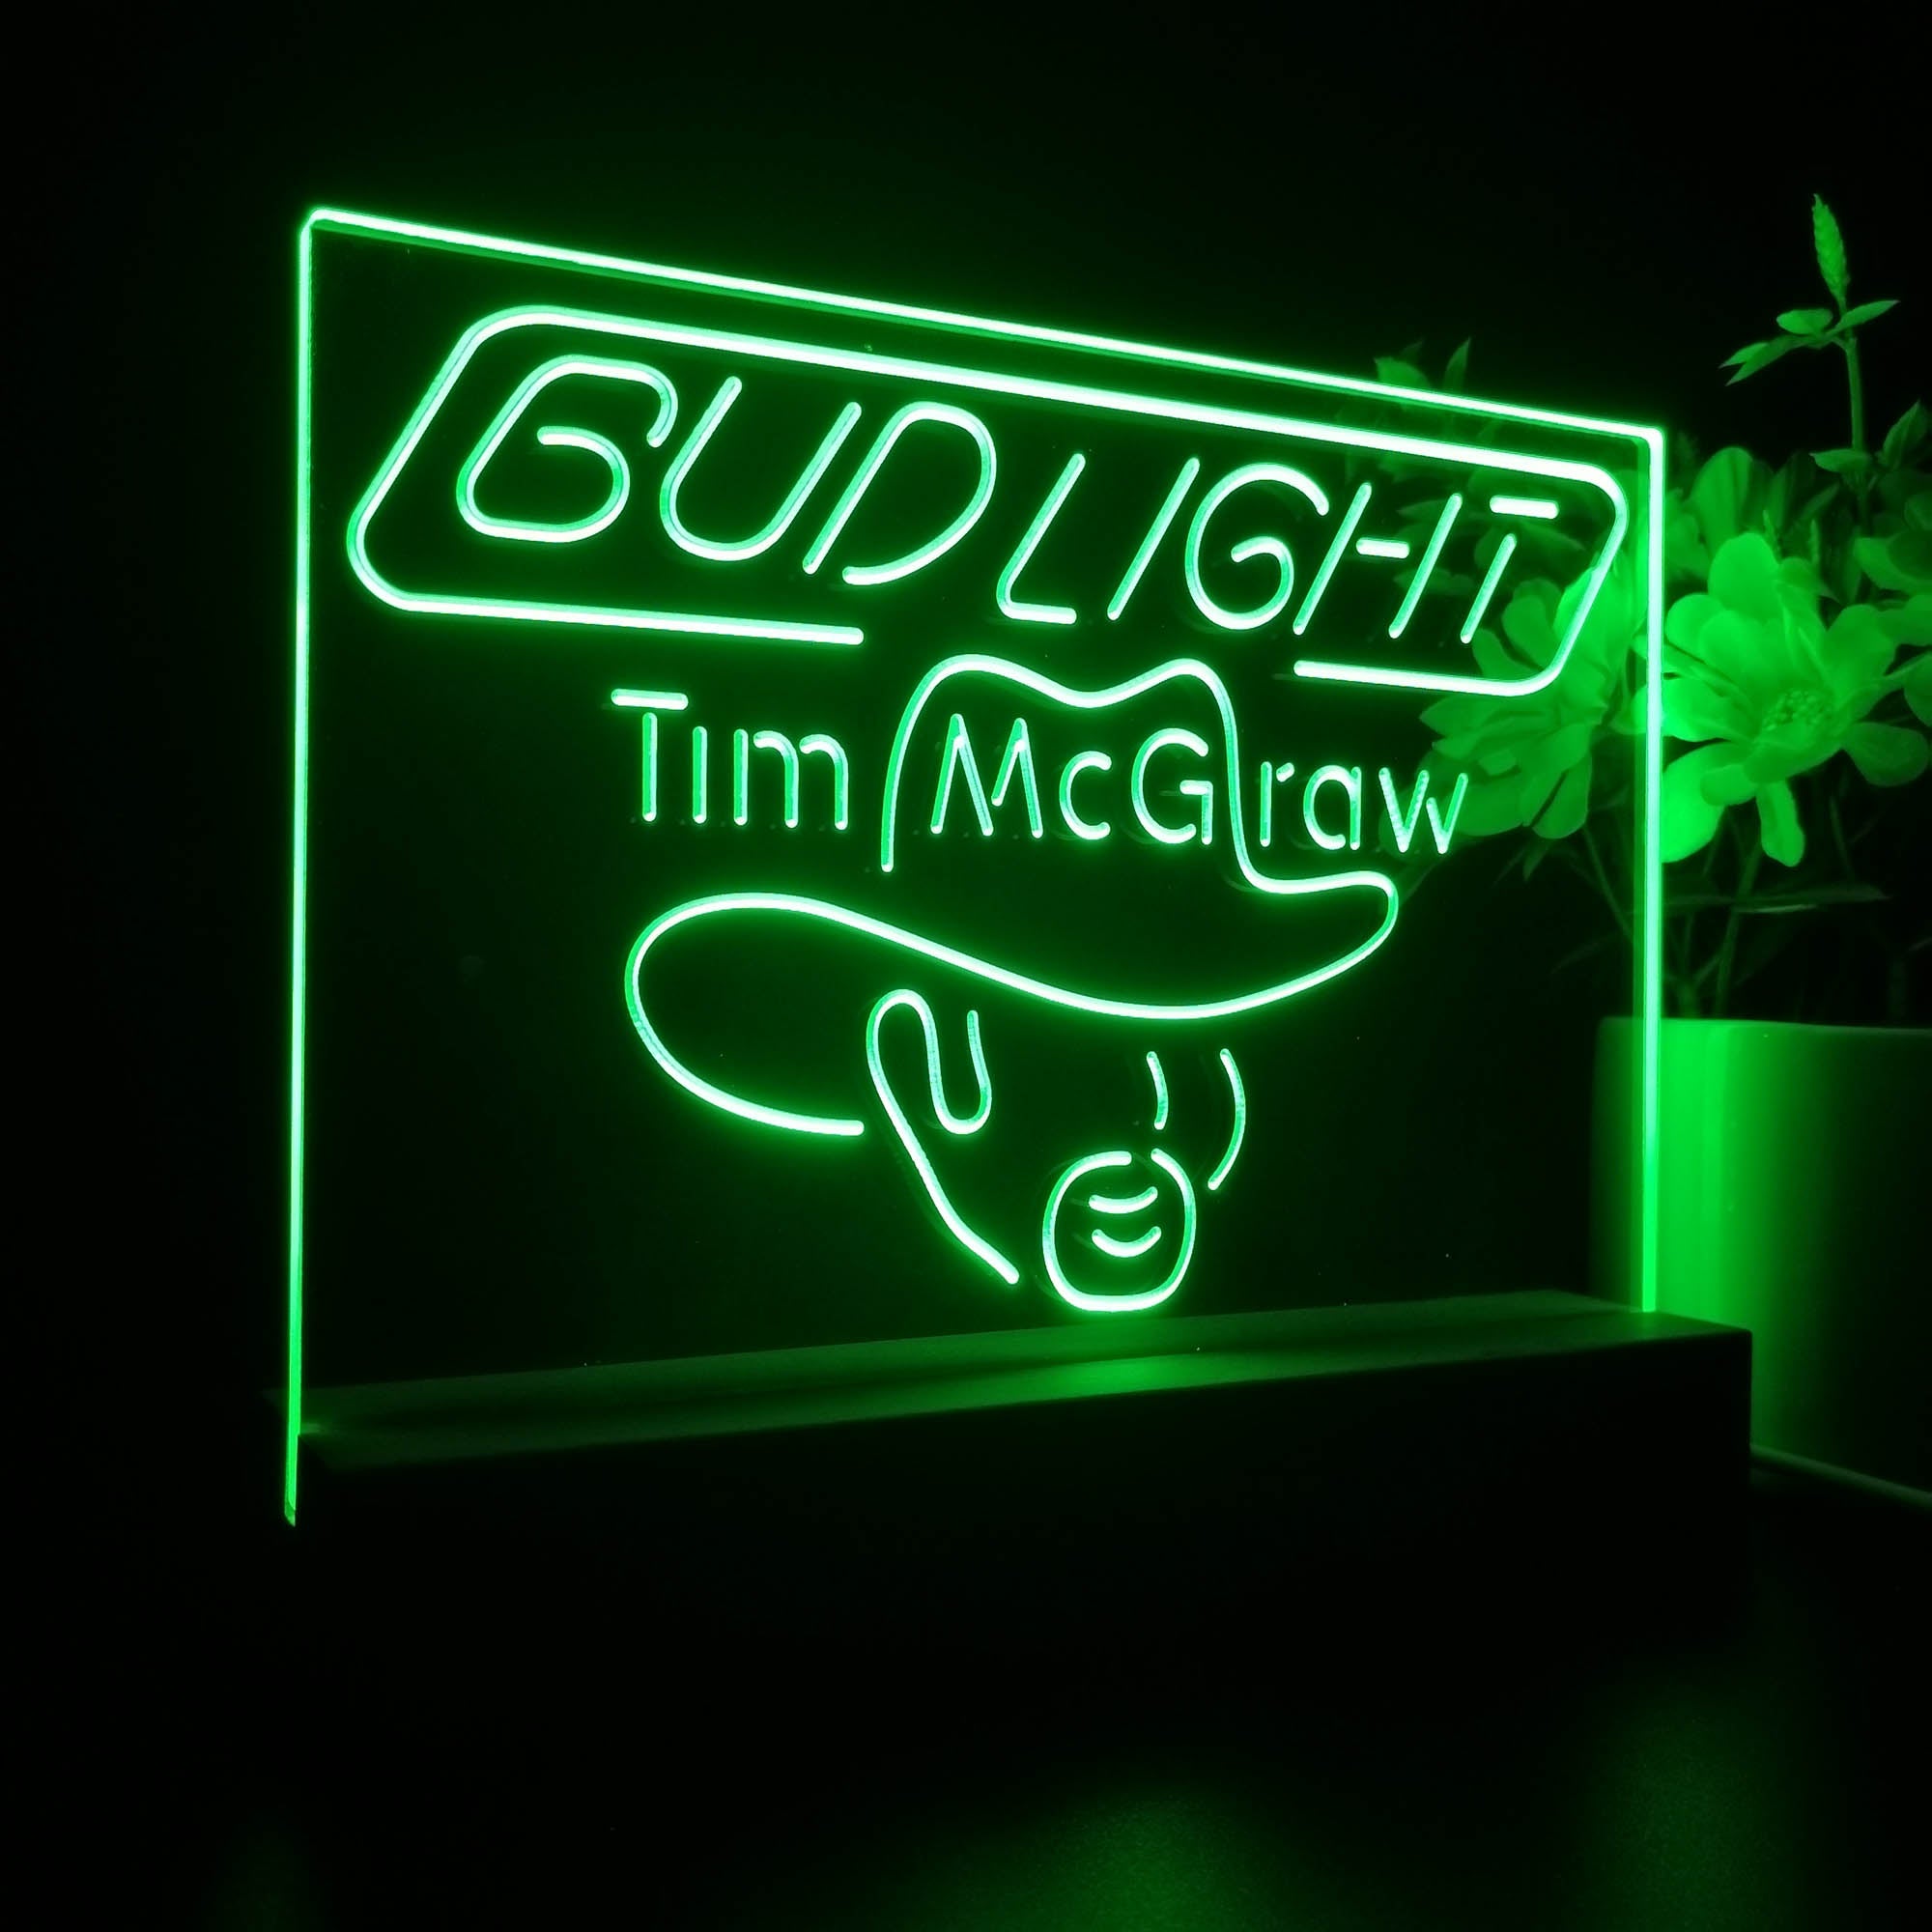 Bud Light Tim McGraw Beer Bar Night Light LED Sign